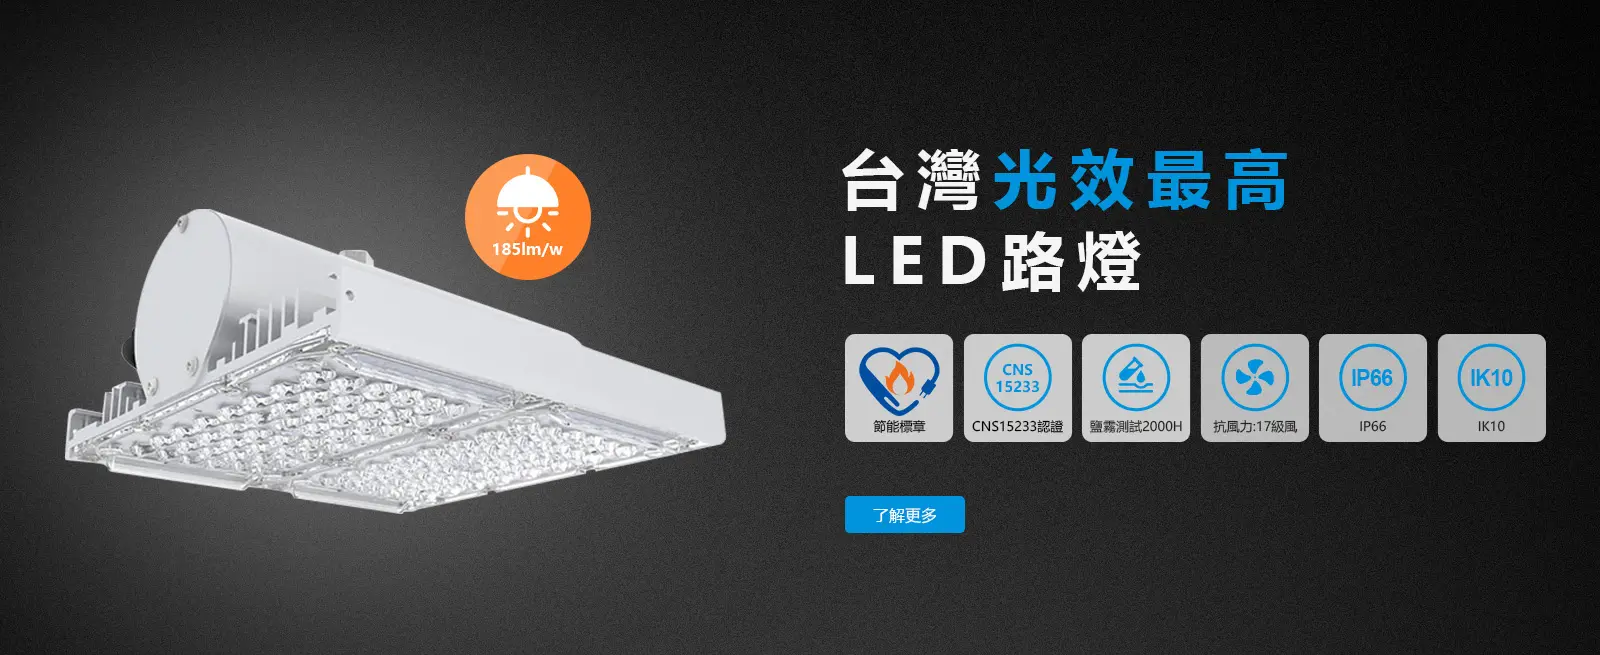 台灣光效最高LED路燈